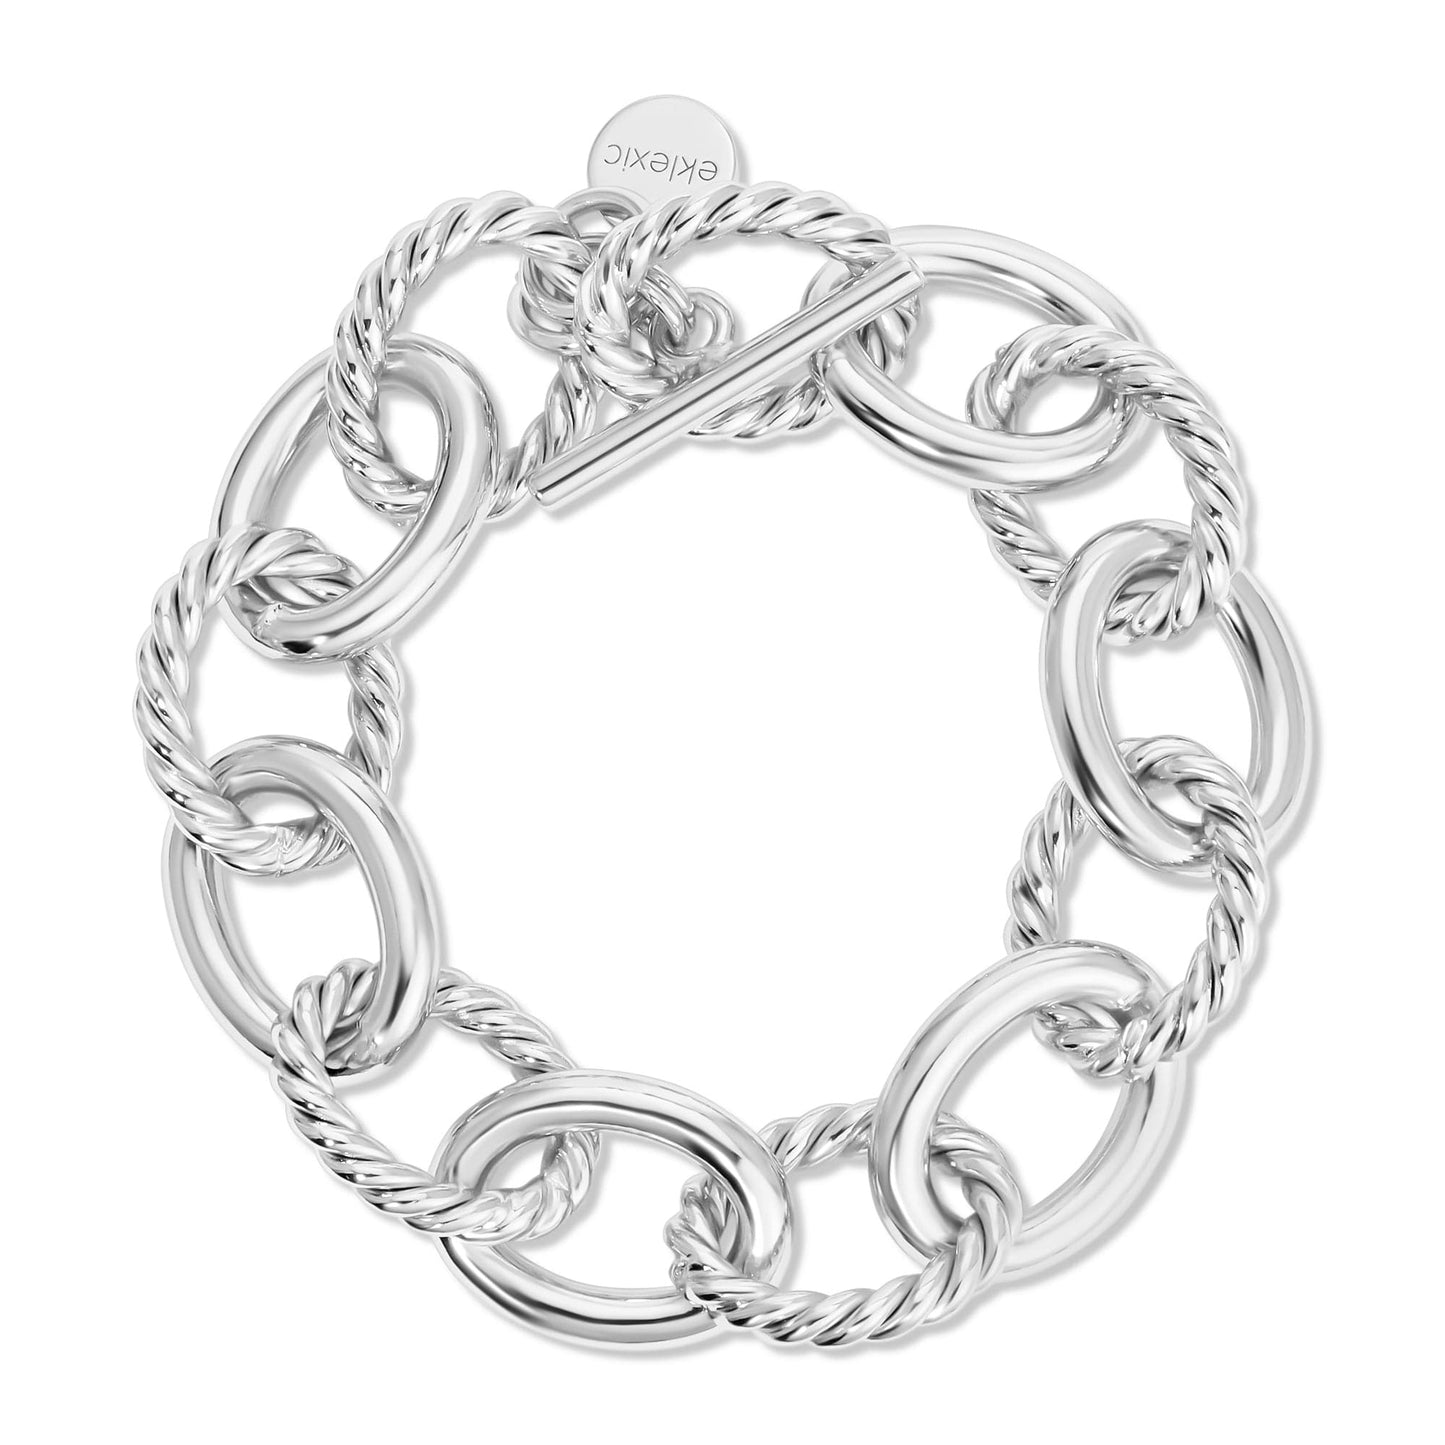 xl alternating twisted link toggle bracelet by eklexic